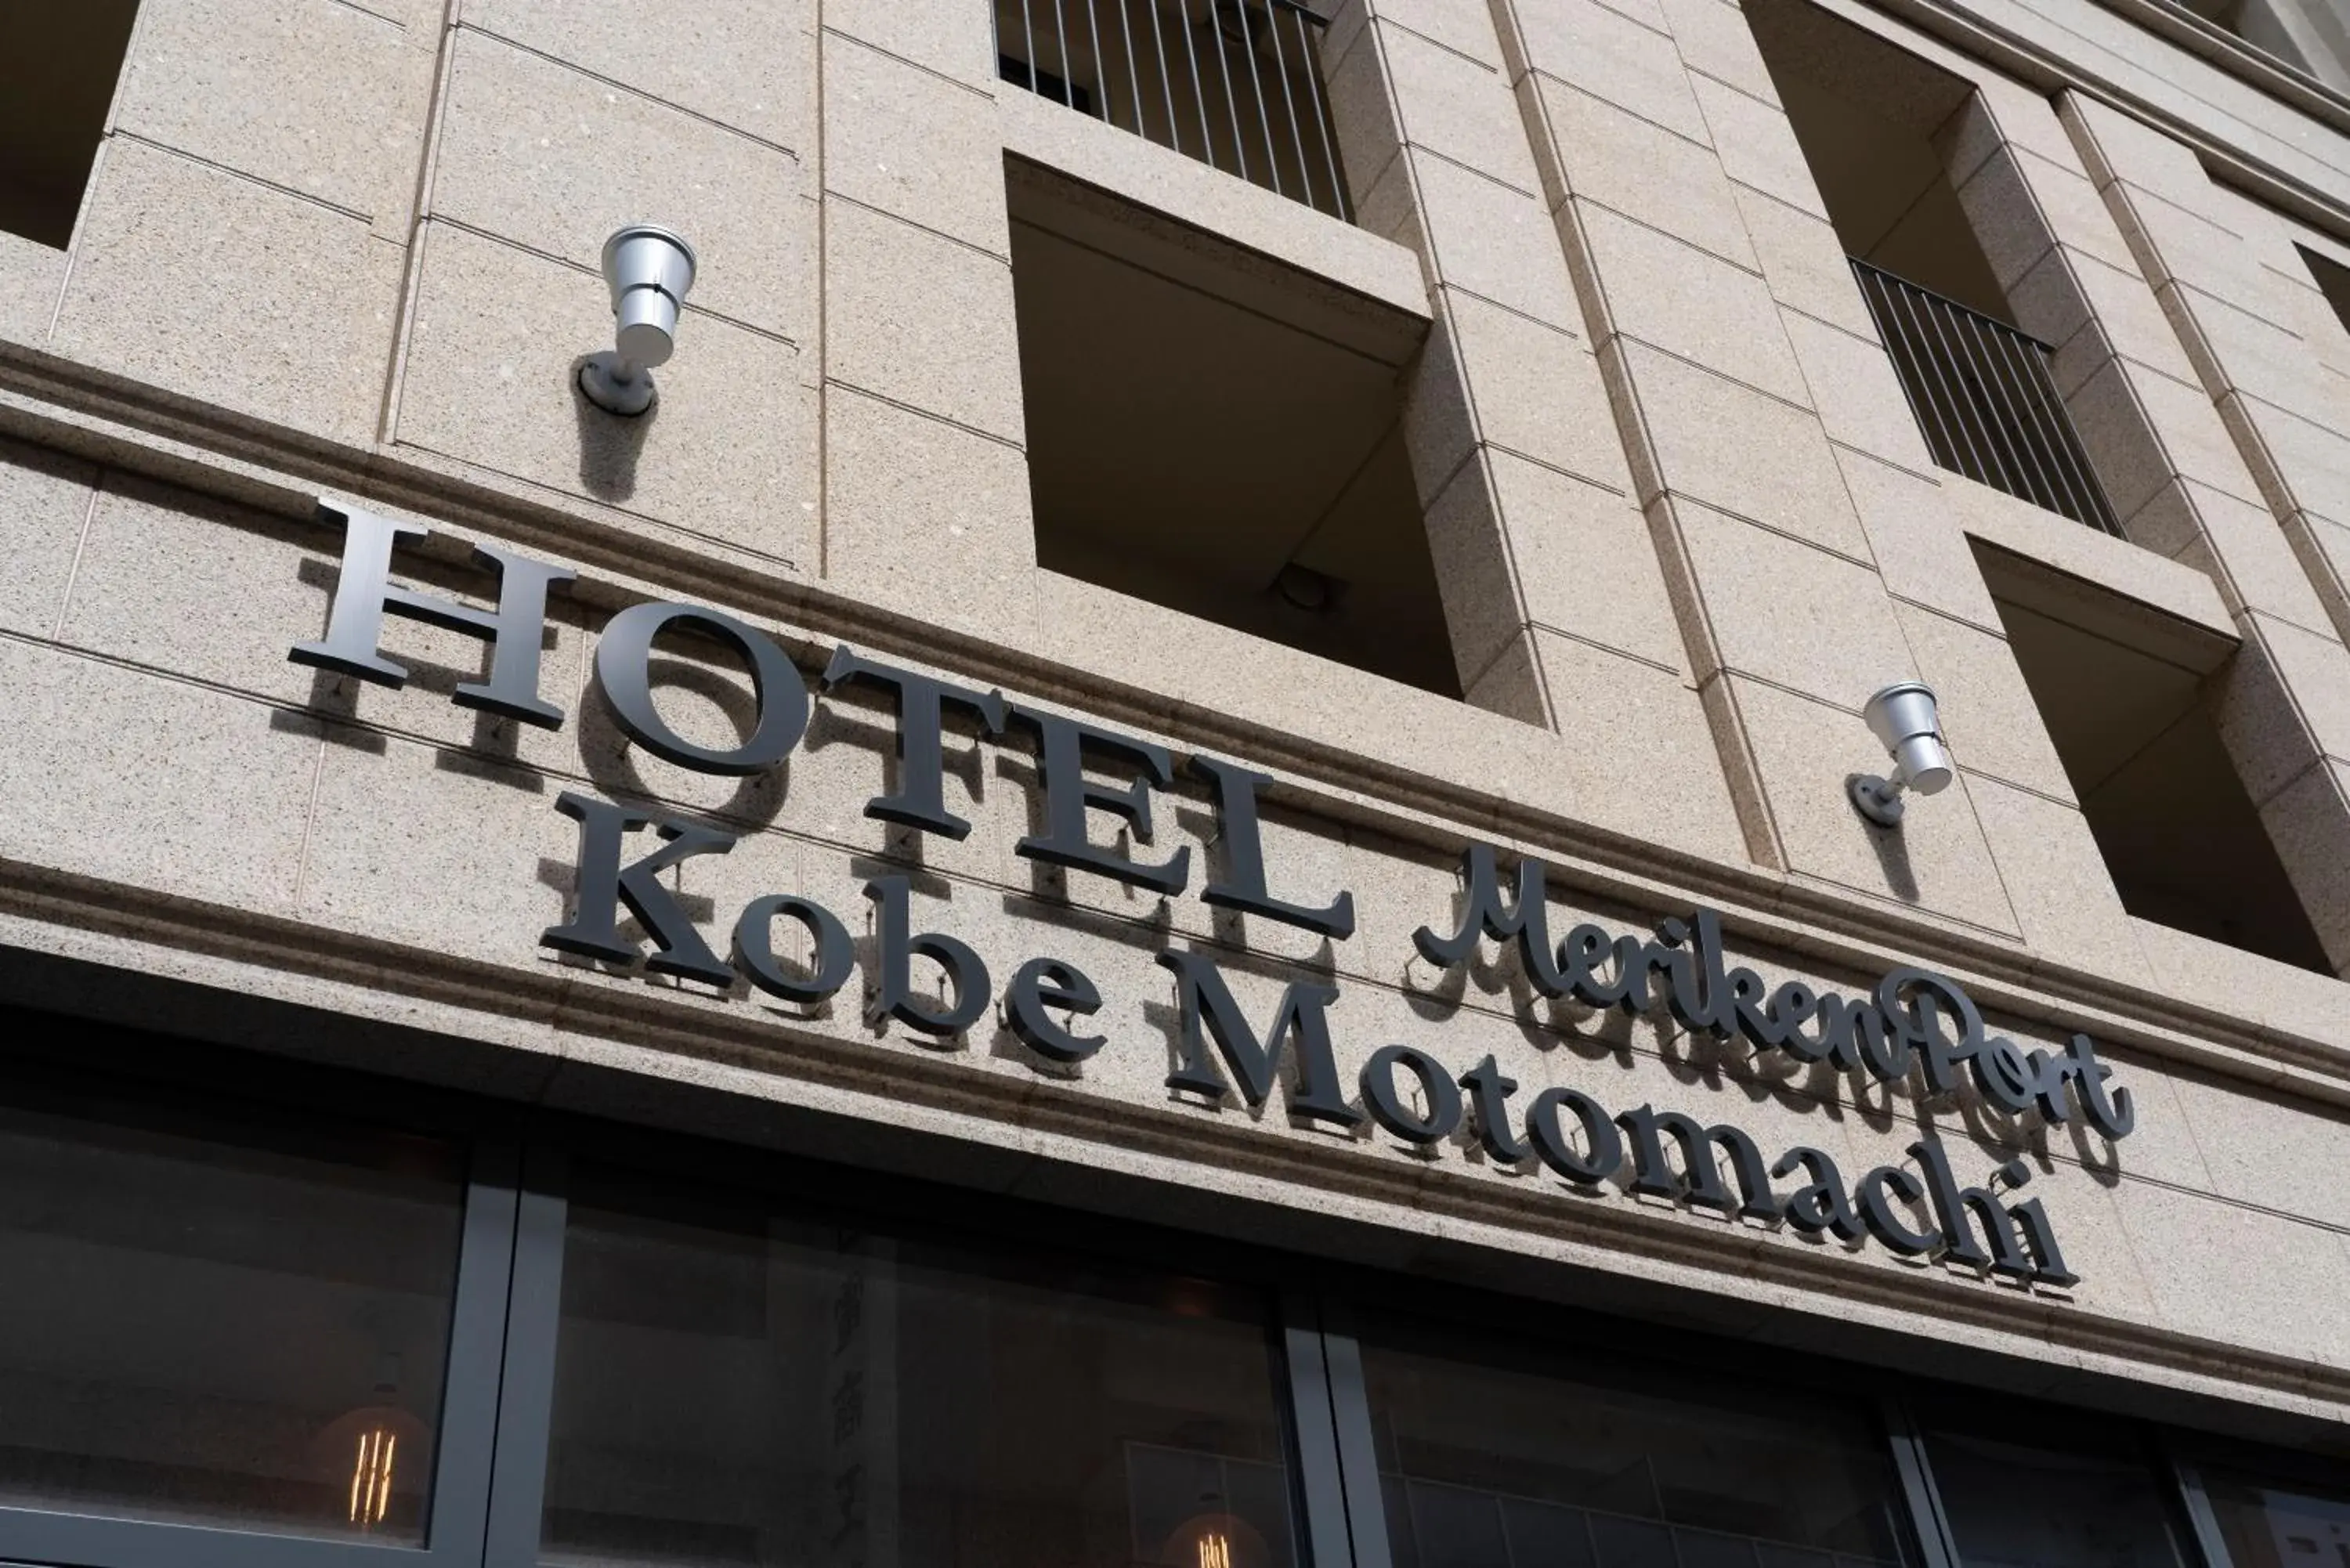 Property logo or sign in Hotel Meet Me Kobe Motomachi